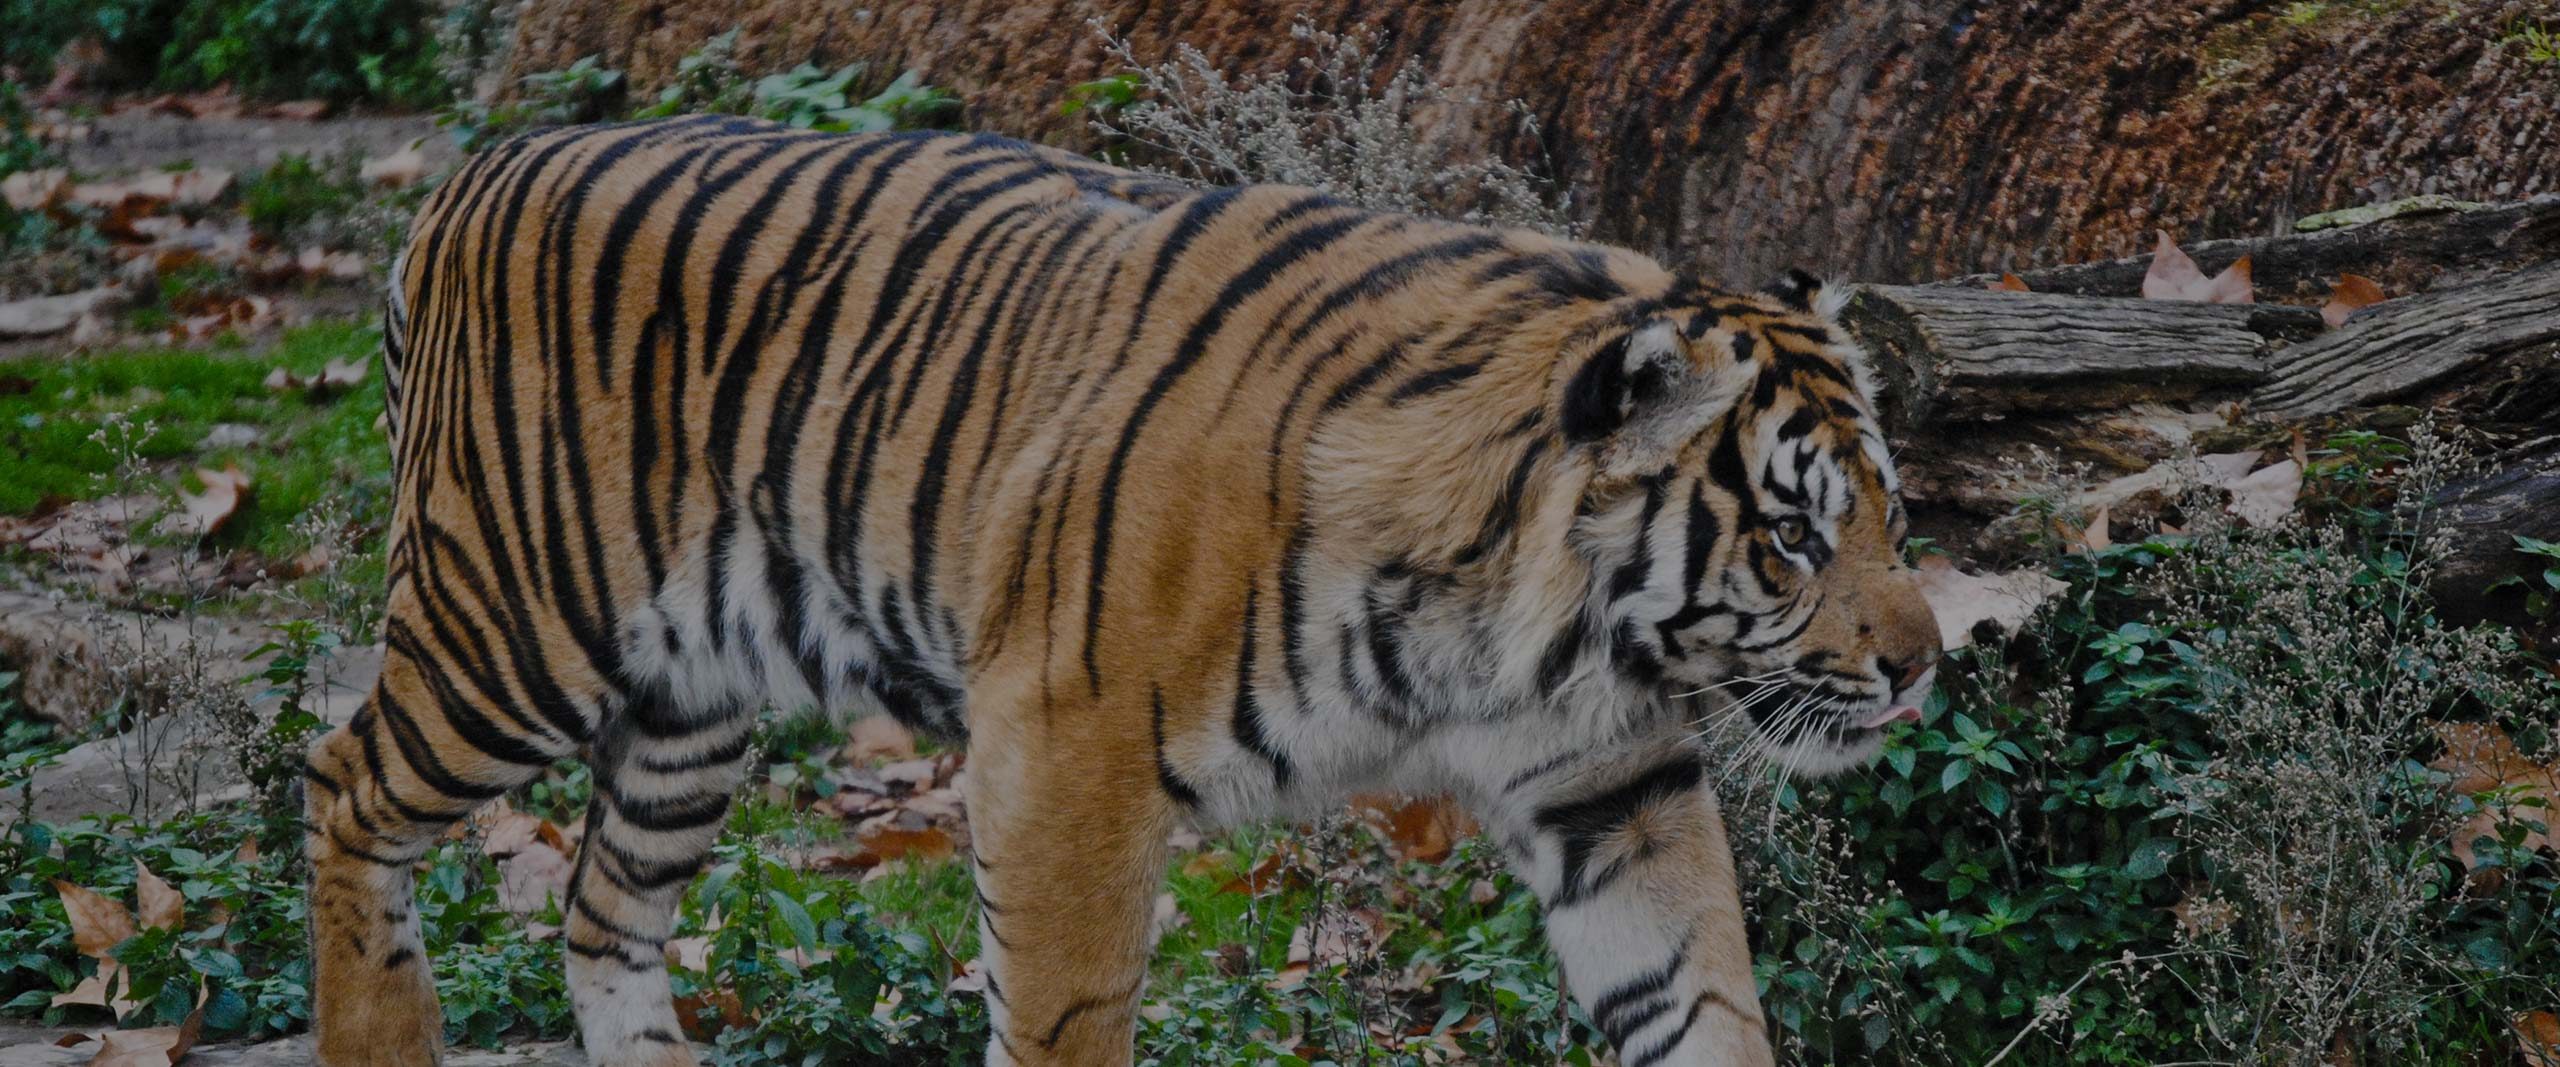 Bengal tiger,Siberian tiger,Tiger,Felidae,Plant,Natural environment,Vegetation